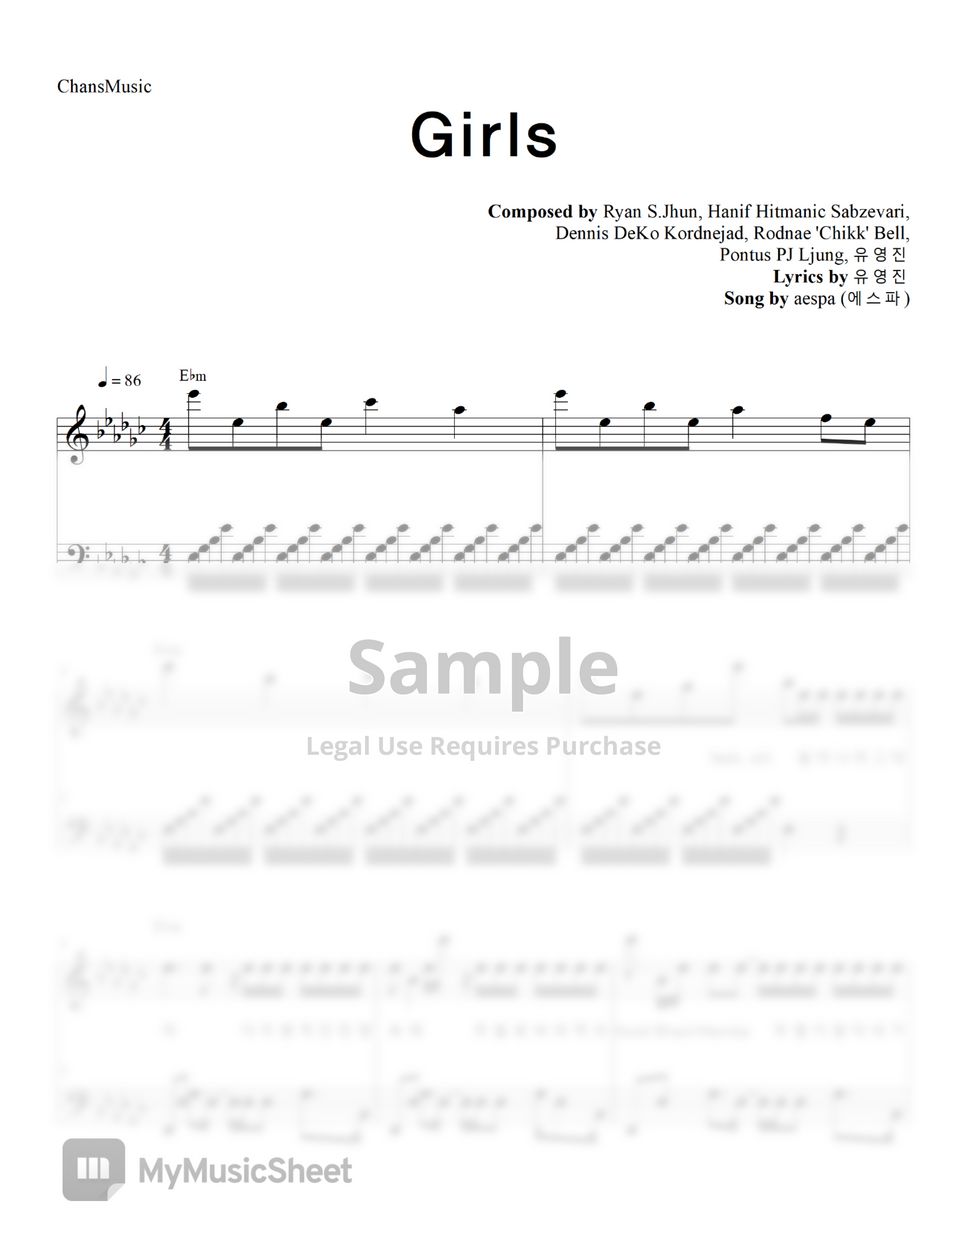 aespa - Girls (Easy Version) by ChansMusic